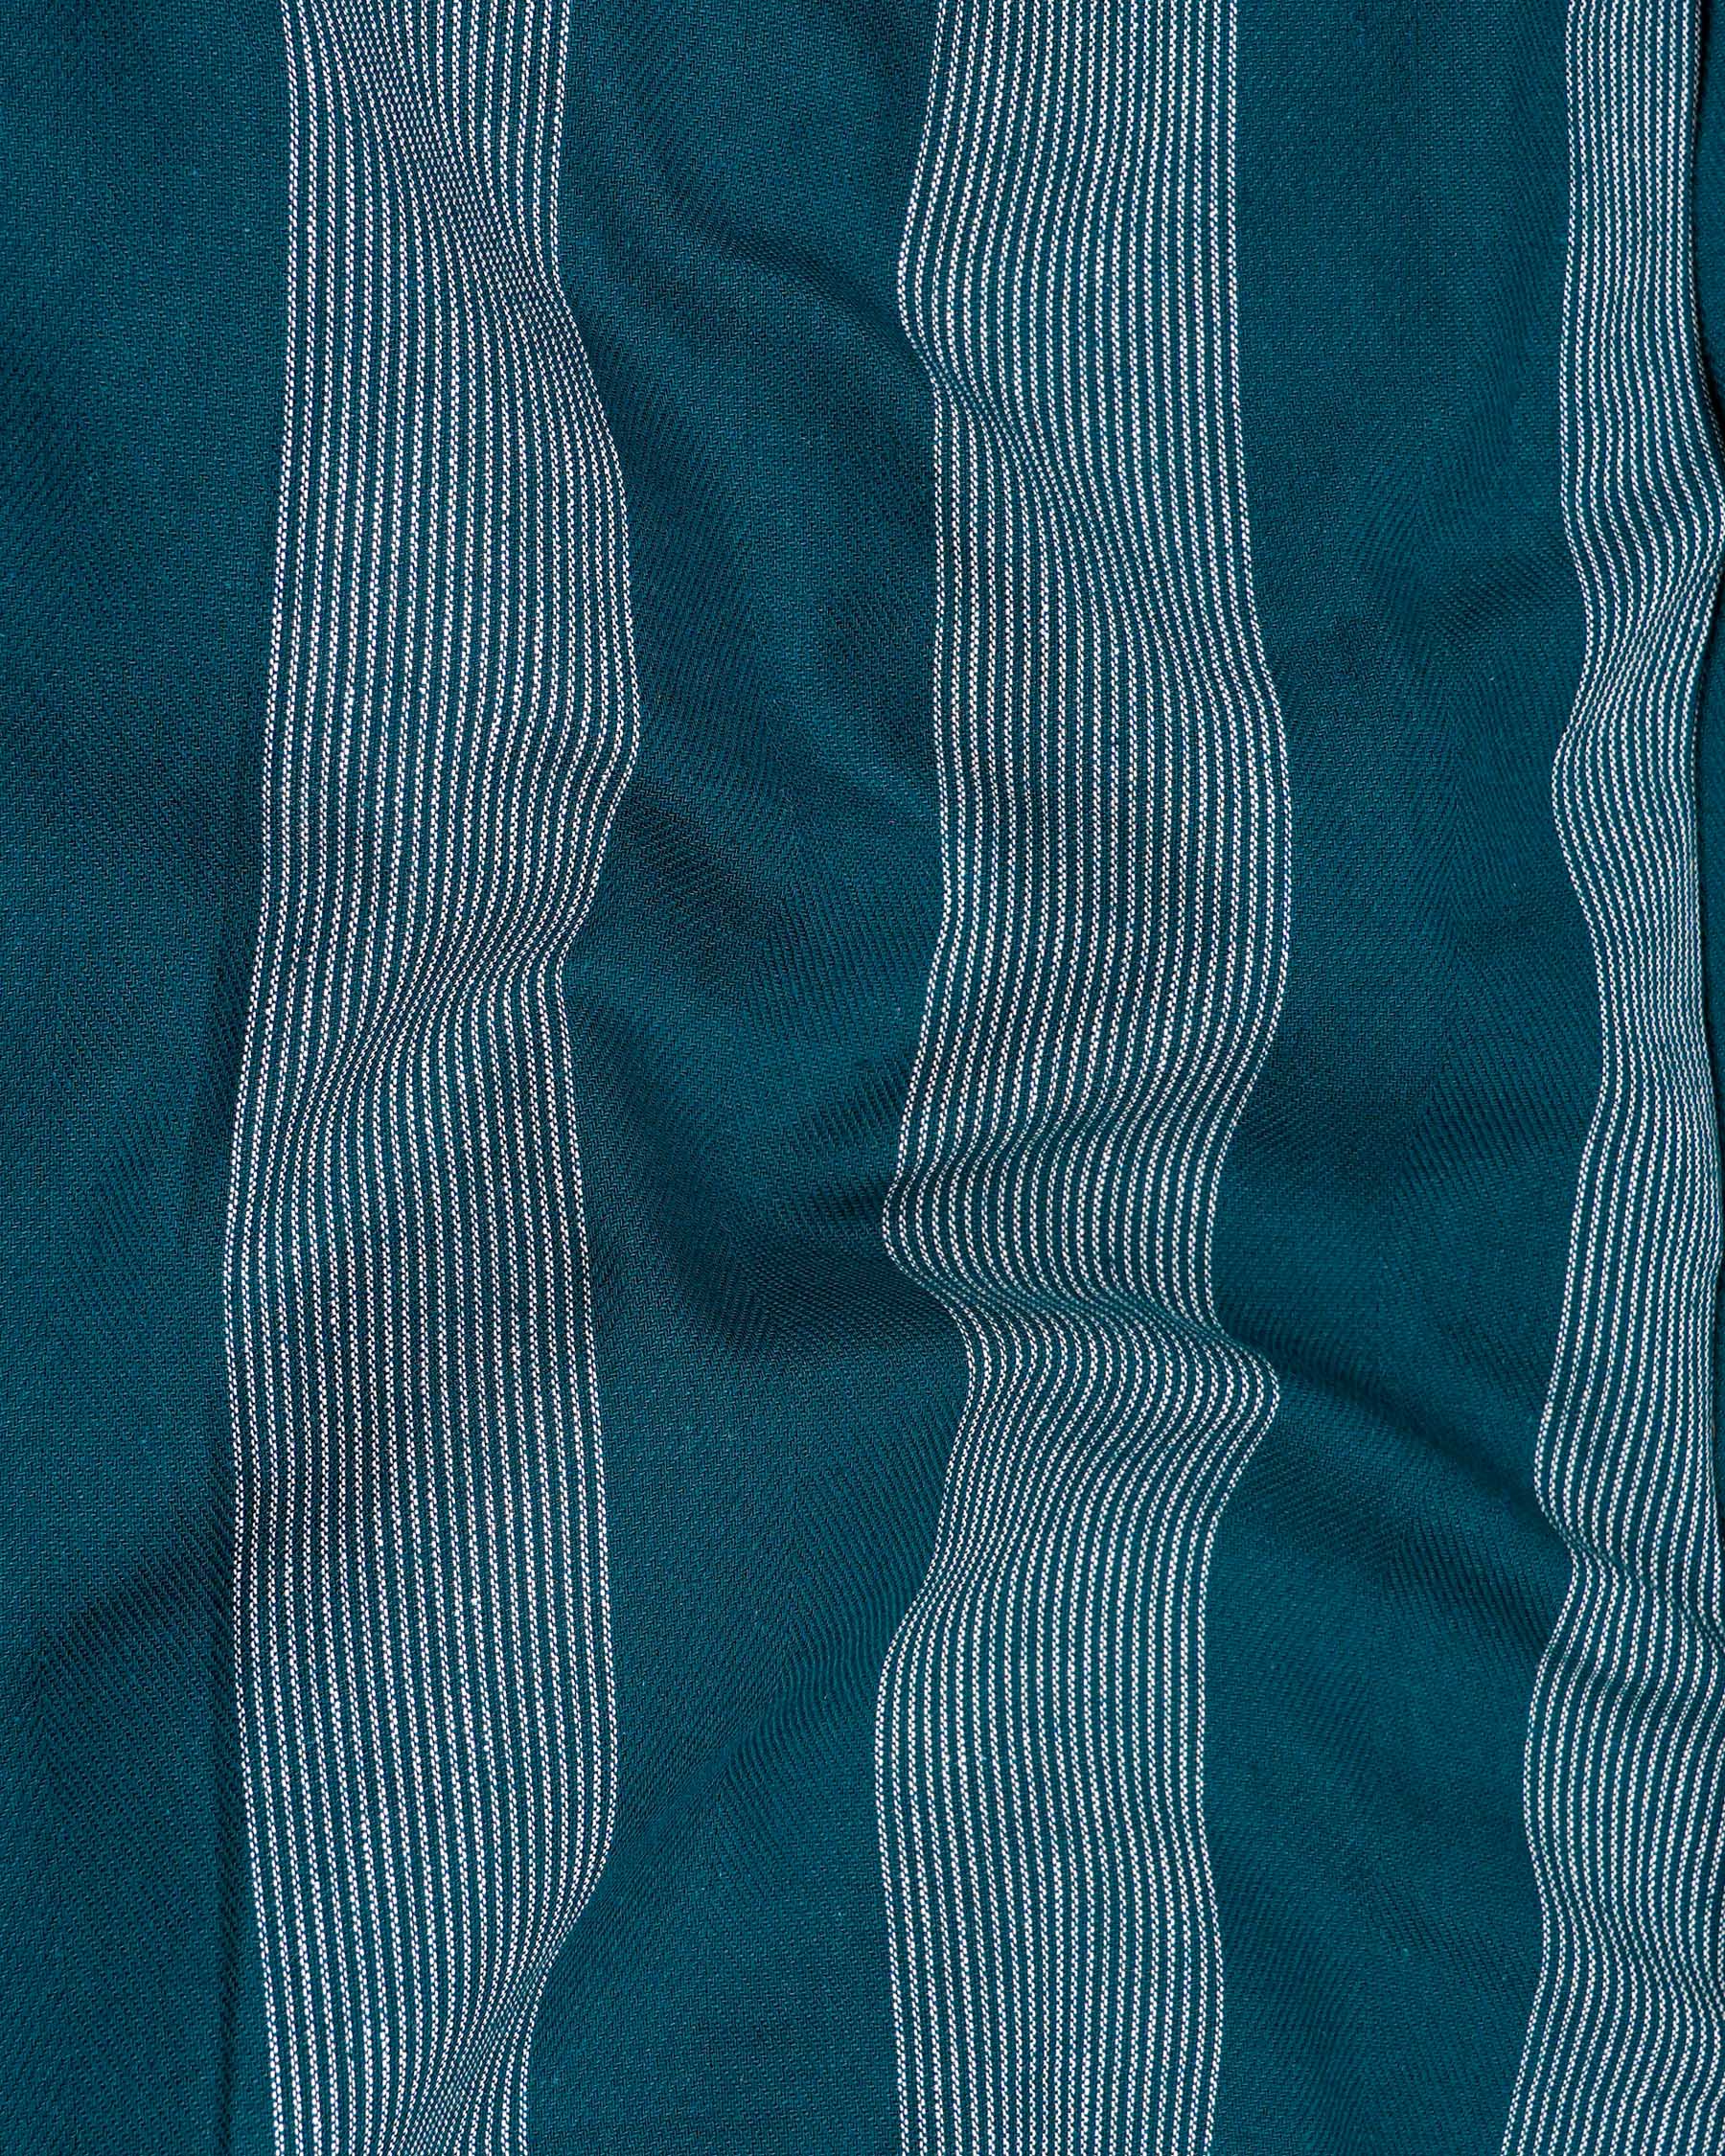 Cyprus Sea Blue with Bright White Striped Herringbone Premium Cotton Shirt 7951-BD-38, 7951-BD-H-38, 7951-BD-39, 7951-BD-H-39, 7951-BD-40, 7951-BD-H-40, 7951-BD-42, 7951-BD-H-42, 7951-BD-44, 7951-BD-H-44, 7951-BD-46, 7951-BD-H-46, 7951-BD-48, 7951-BD-H-48, 7951-BD-50, 7951-BD-H-50, 7951-BD-52, 7951-BD-H-52